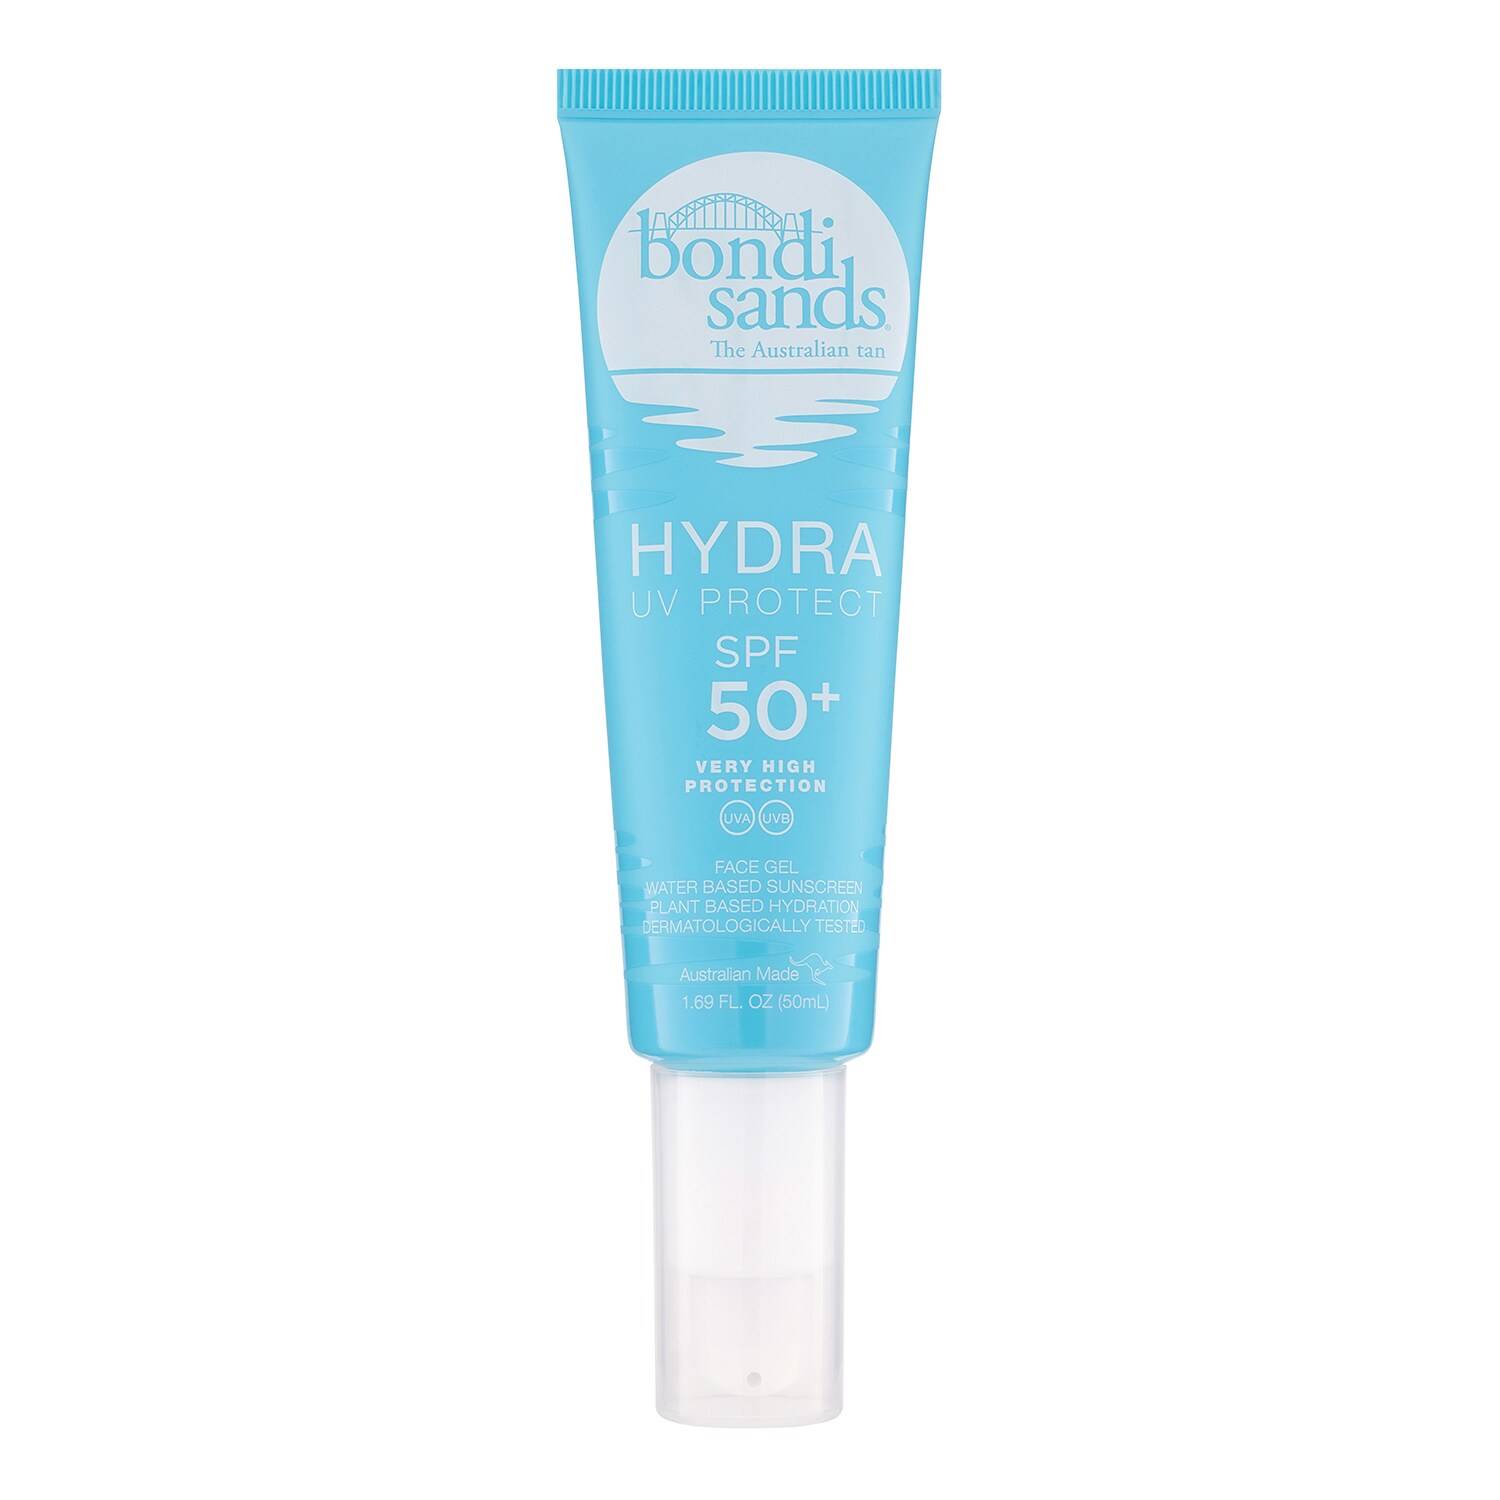 Bondi Sands Hydra Uv Protect Spf 50+ Face Gel 50Ml